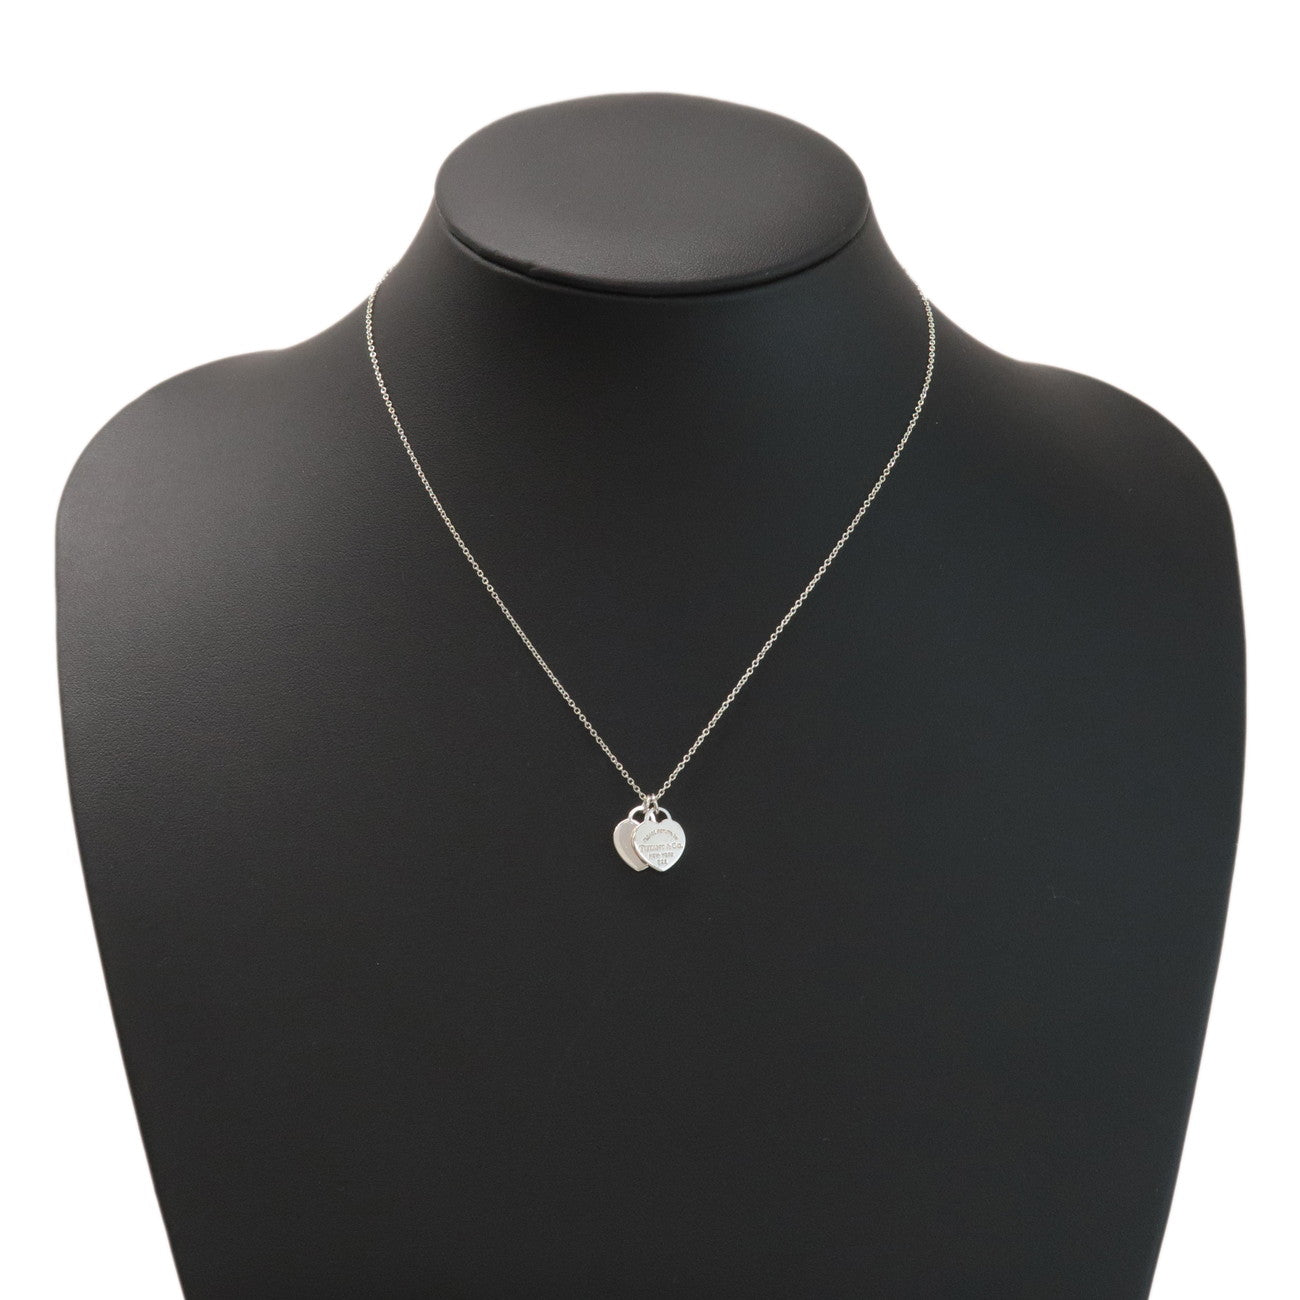 Tiffany&Co. Return to Tiffany Double Hearts Necklace SV925 Silver